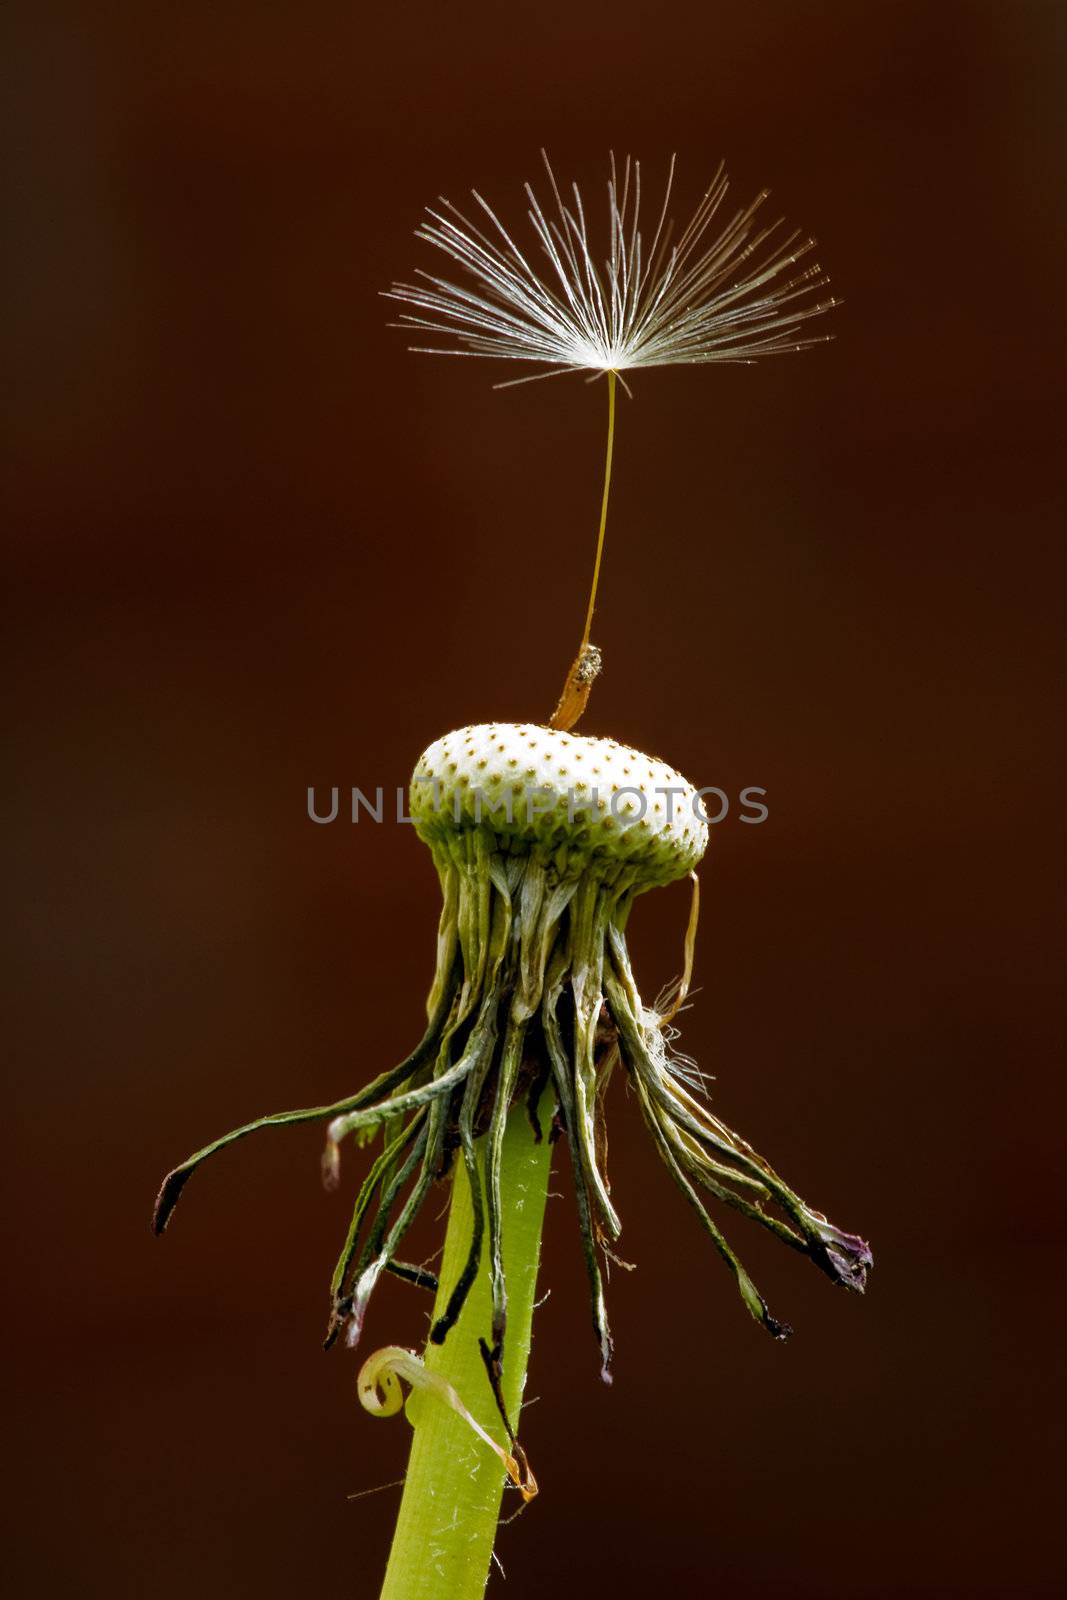 A single seed left on a dandelion Latin Name: Taraxacum officinale